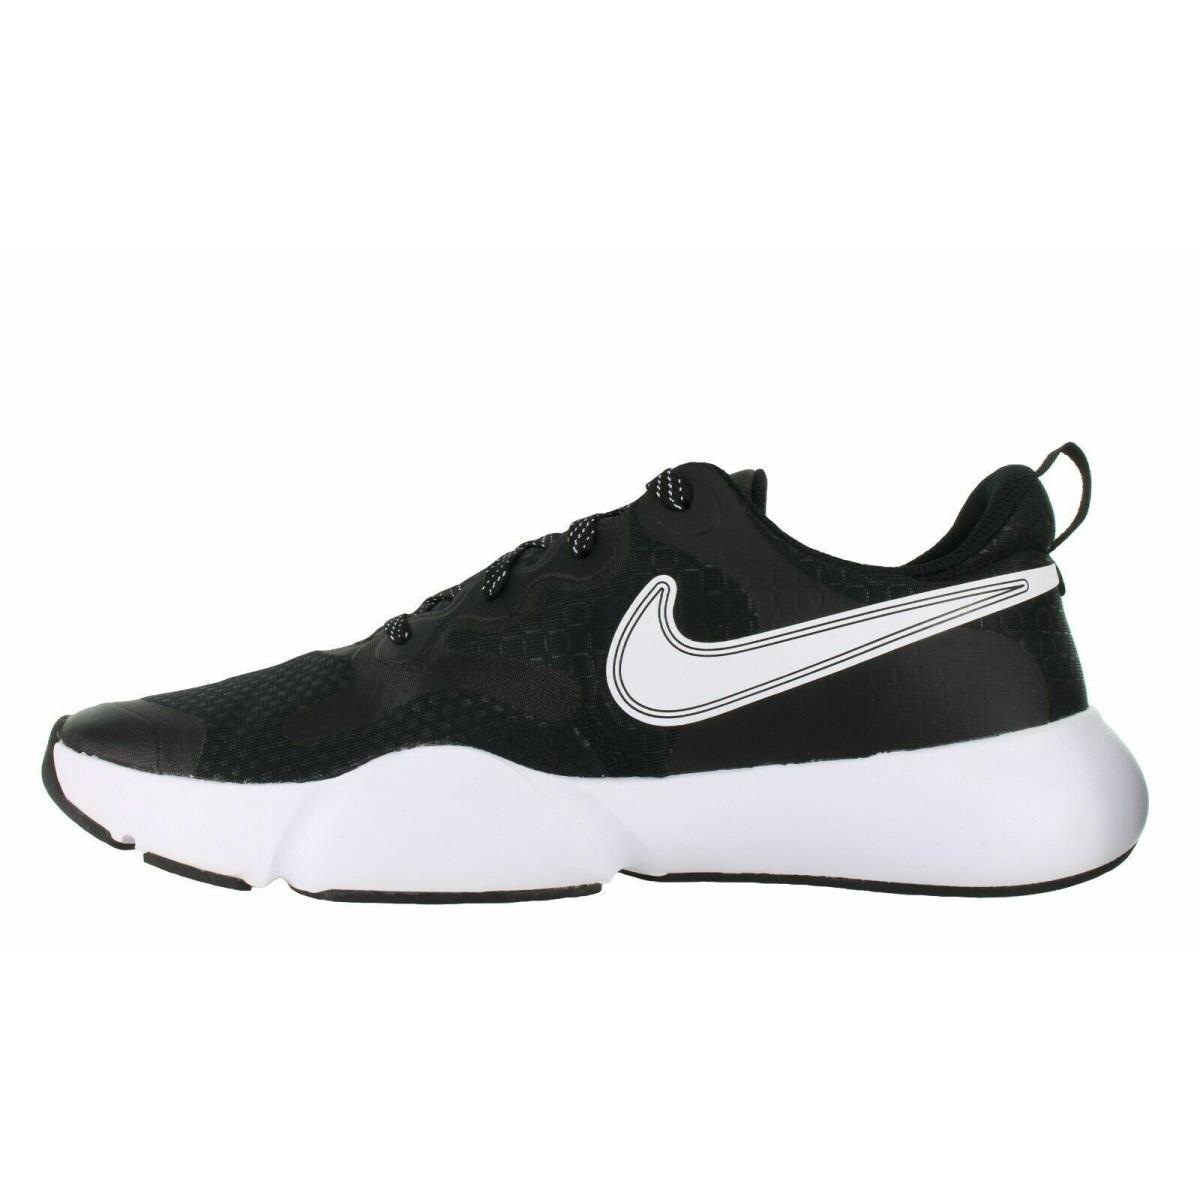 Nike Men`s Speedrep Running Training Shoes Black White CU3579 002 Size 9 - 12